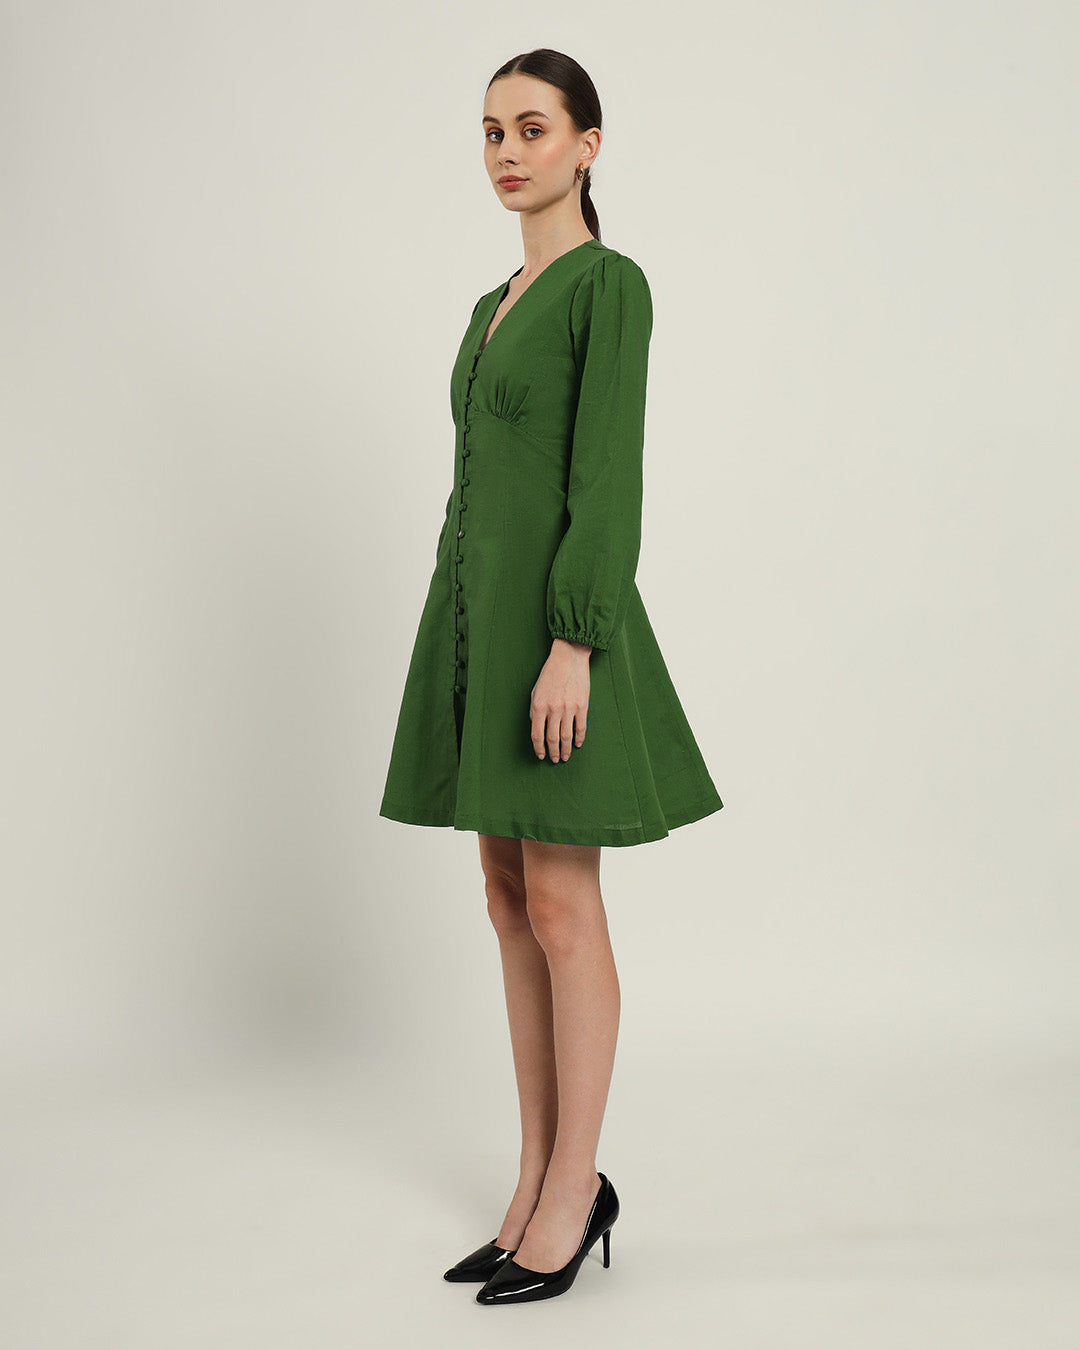 The Dafni Emerald Cotton Dress